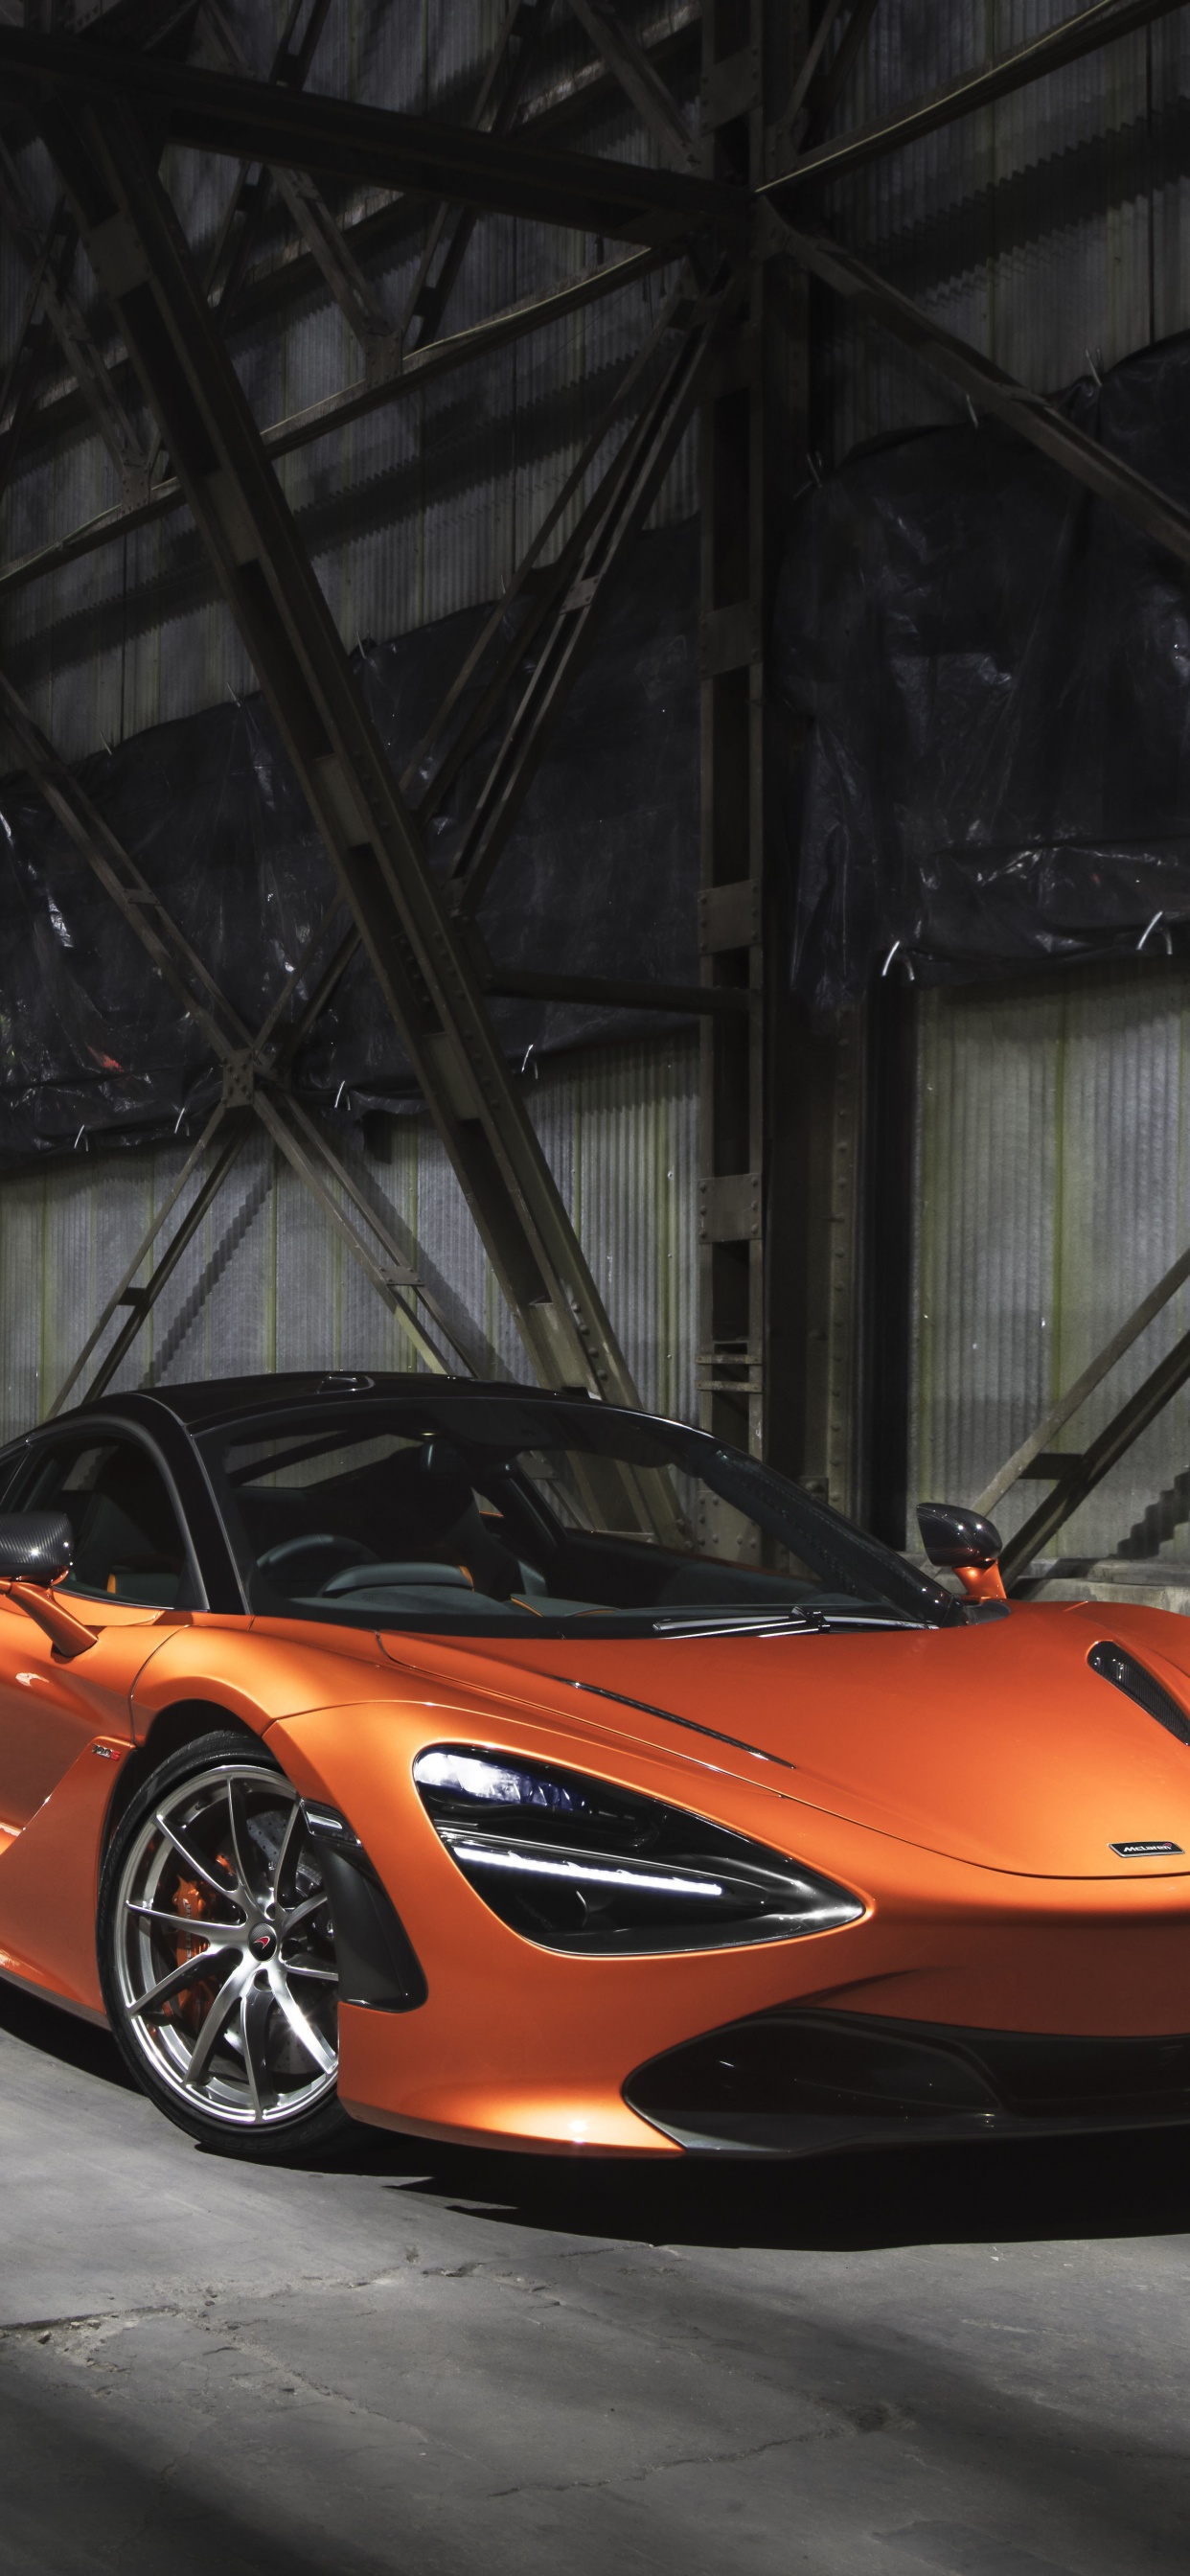 Oranger Lamborghini Aventador in Einem Tunnel. Wallpaper in 1242x2688 Resolution